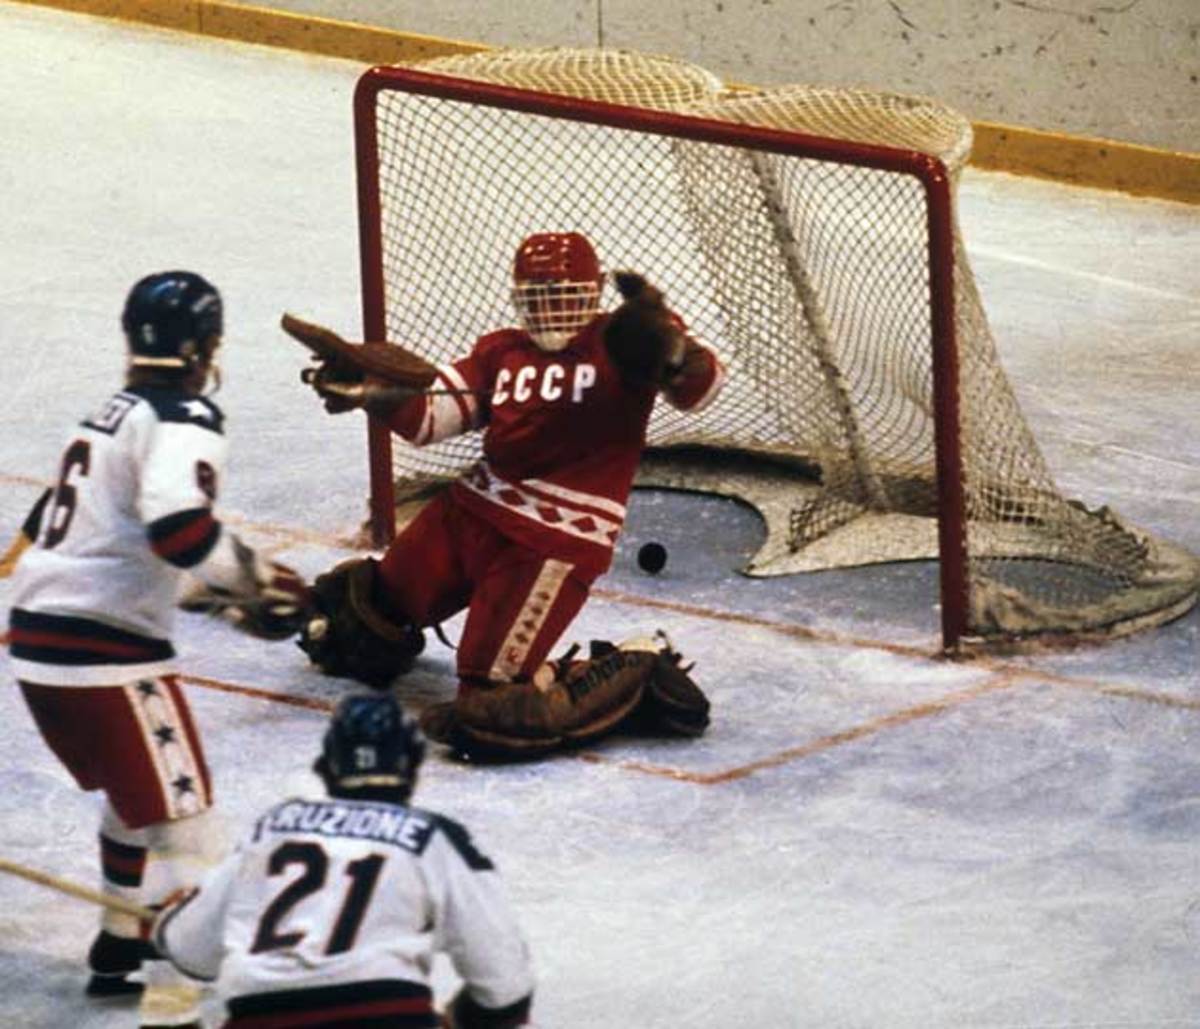 Mike Eruzione (21) of the U.S. wristed the winning goal past Vladimir Myshkin at Lake Placid in 1980.